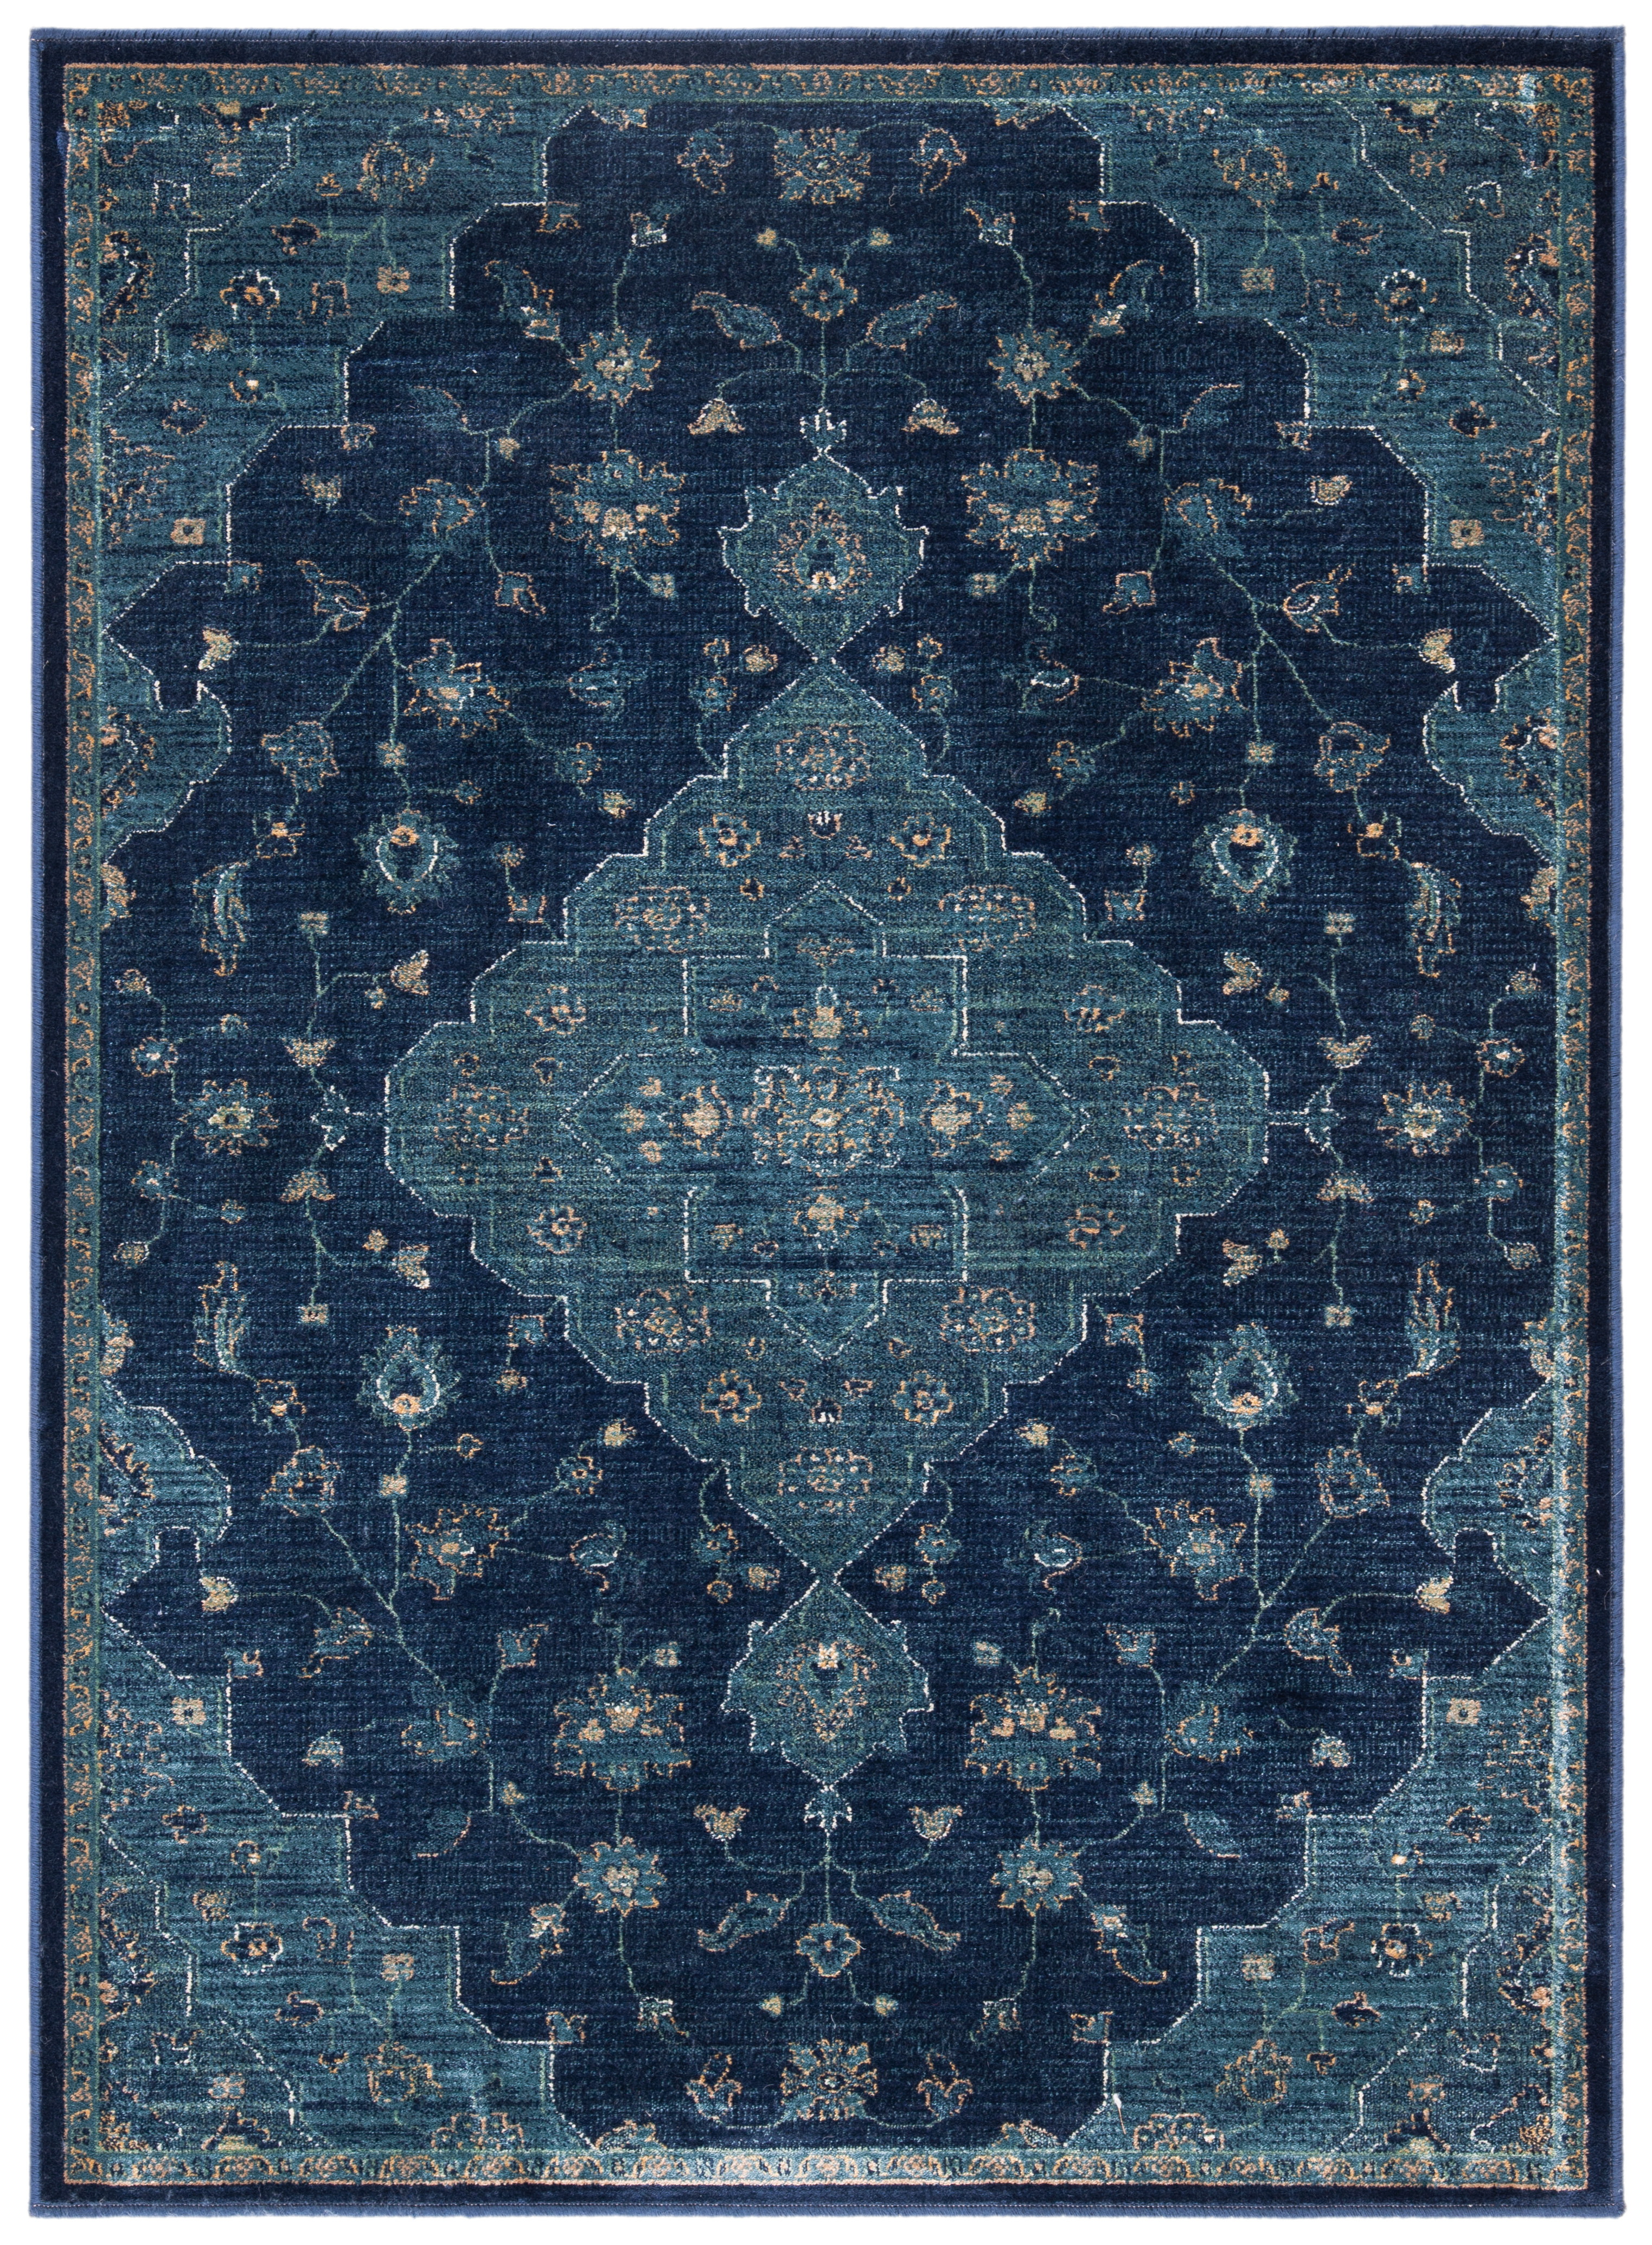 Tapis de salon interieur en bleu marine & bleu canard, 201 x 279 cm